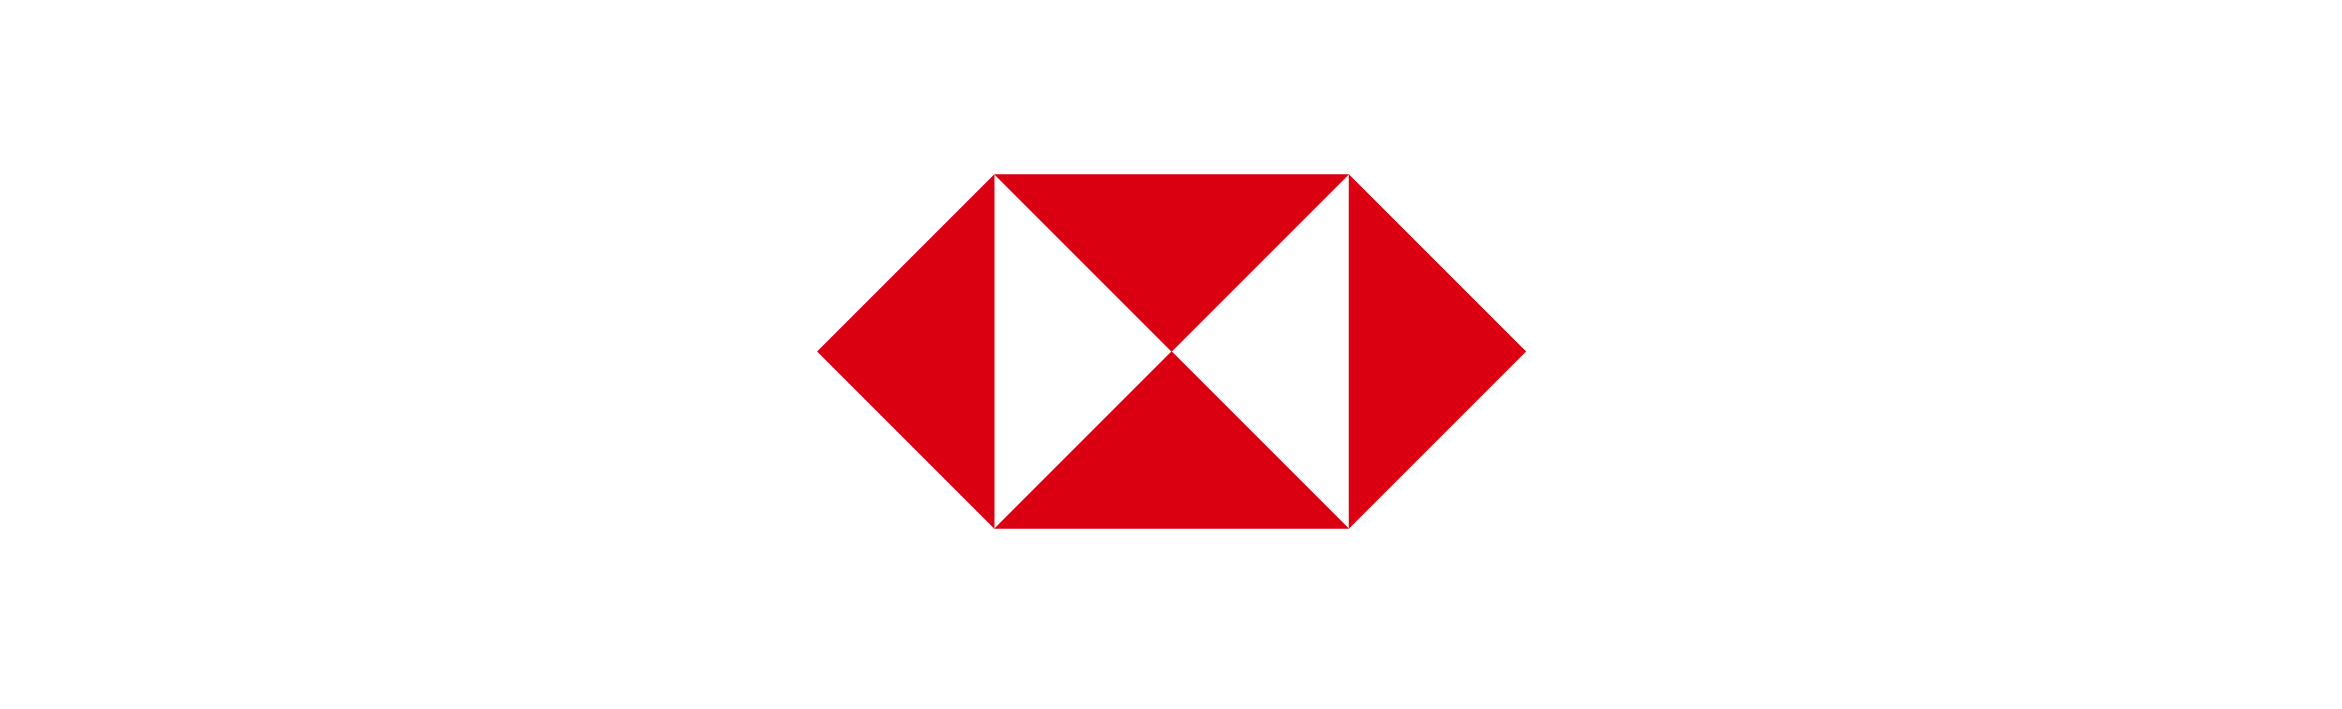 HSBC Global Private Banking logo